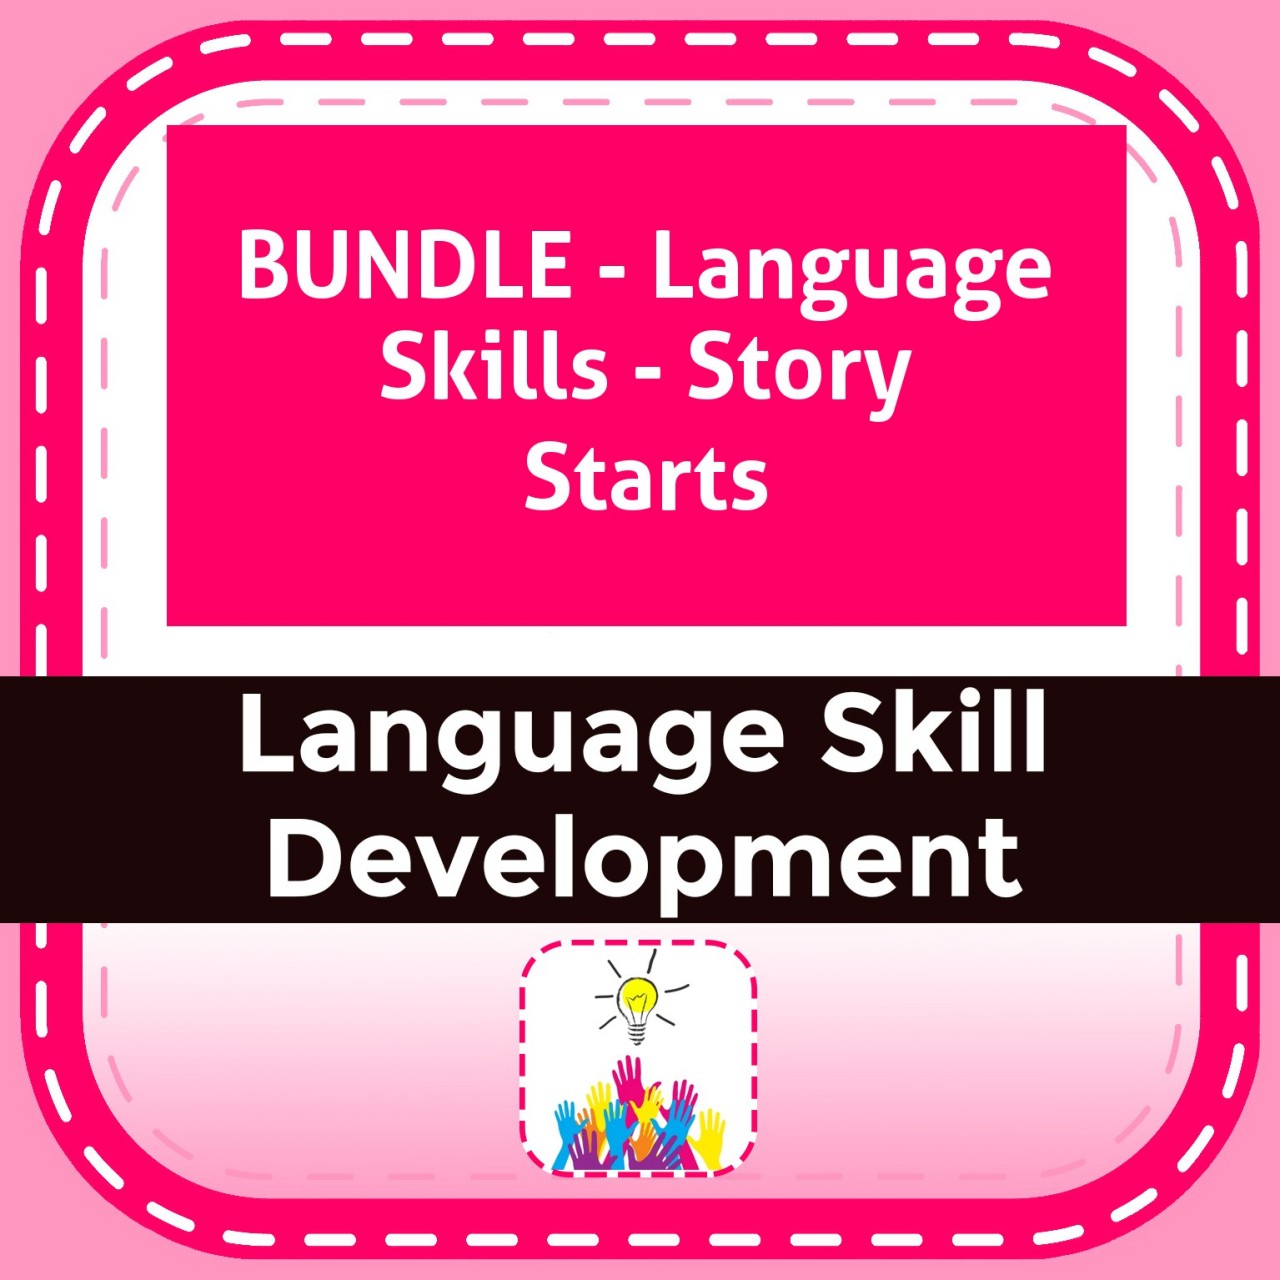 BUNDLE - Language Skills - Story Starts